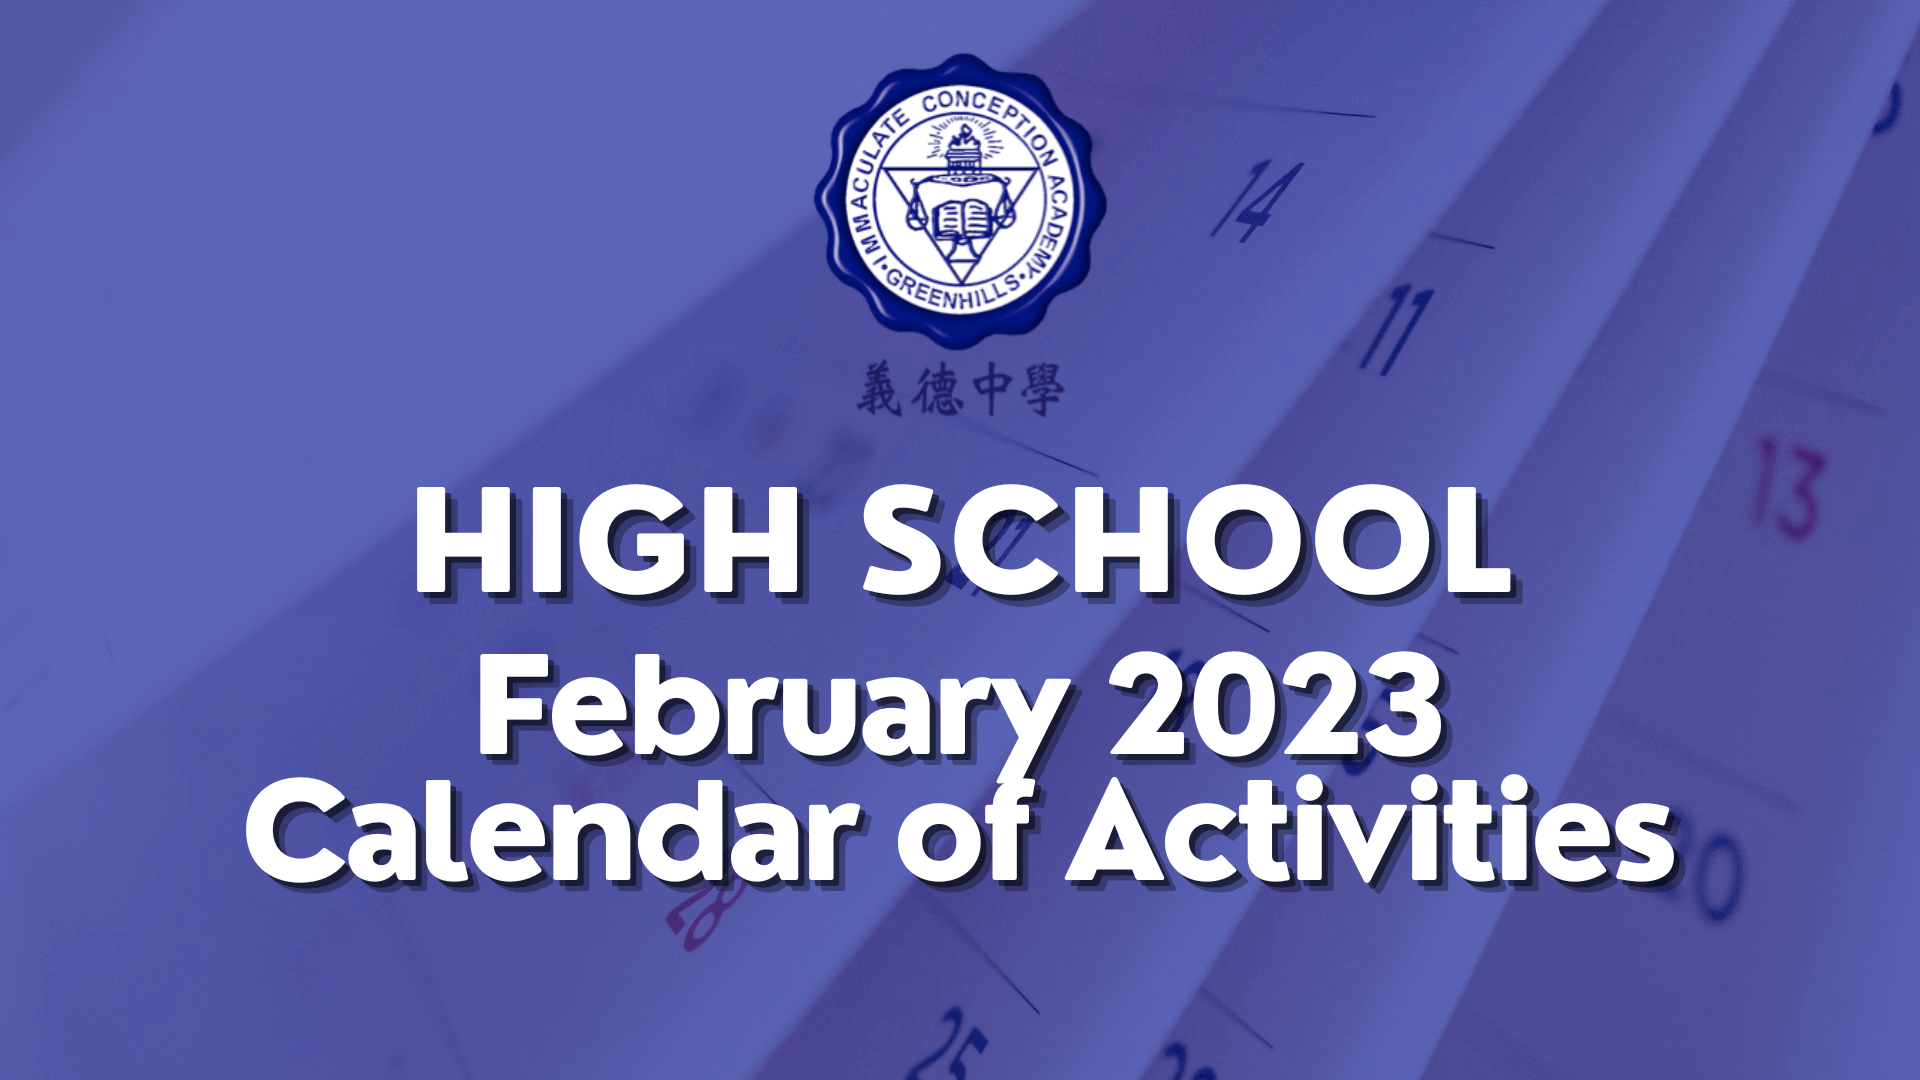 High School Calendar of Activities for February 2023